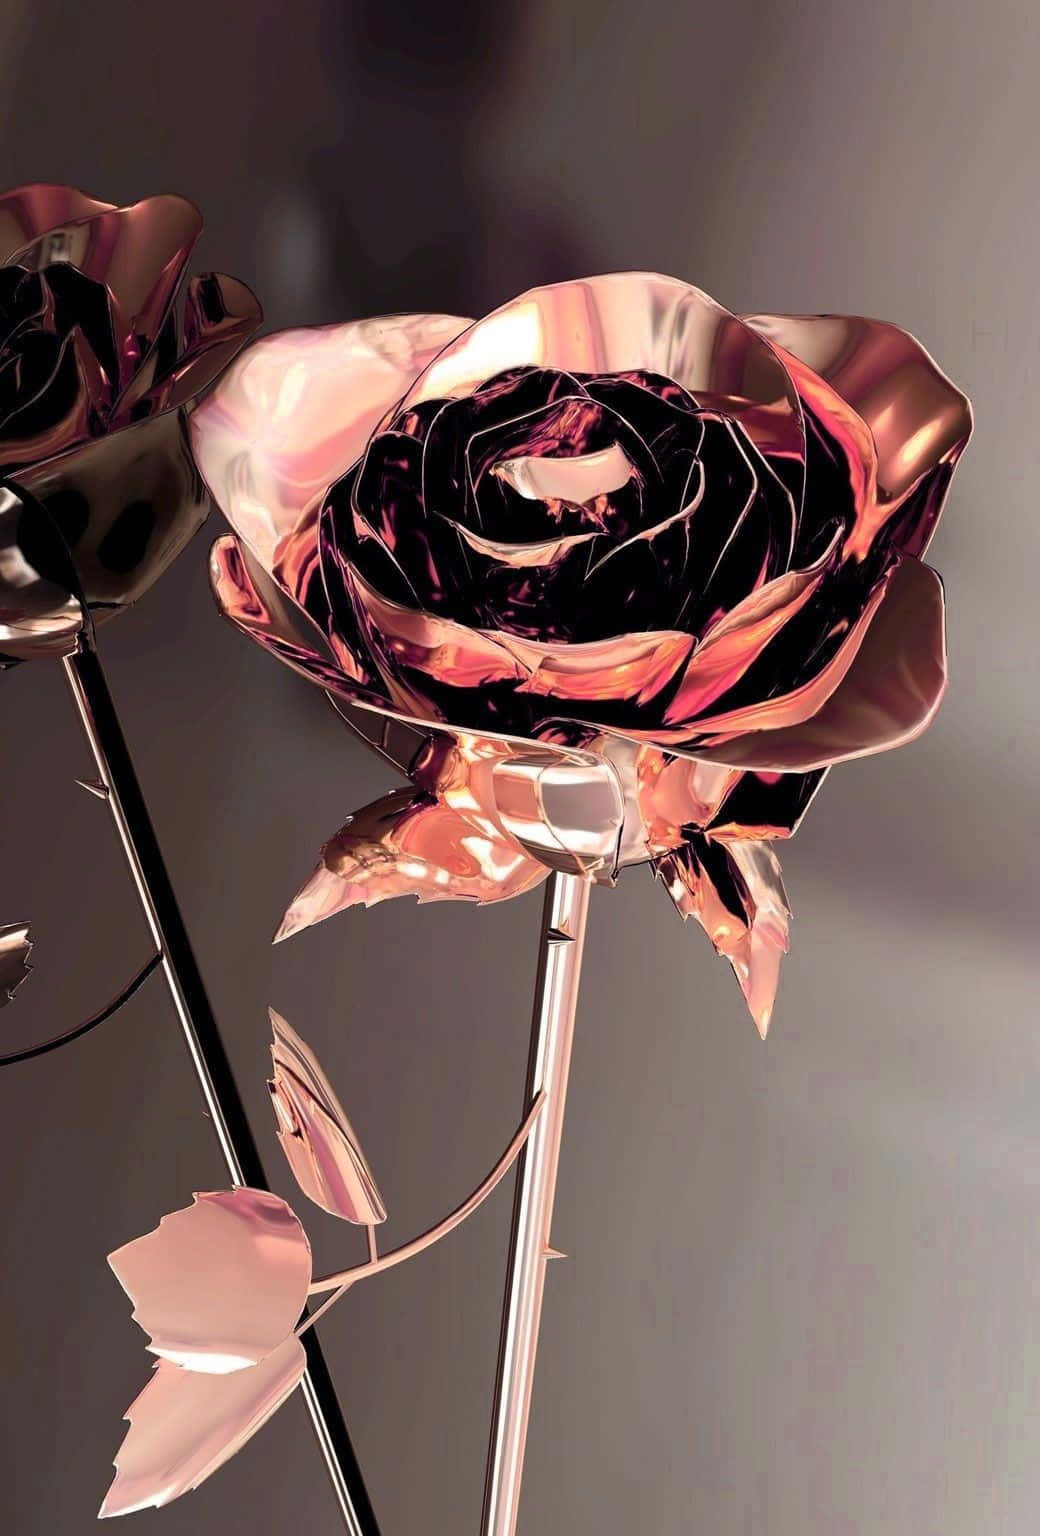 Caption: Elegant Rose Gold Phone Featuring Metallic Rose Flower Design Background